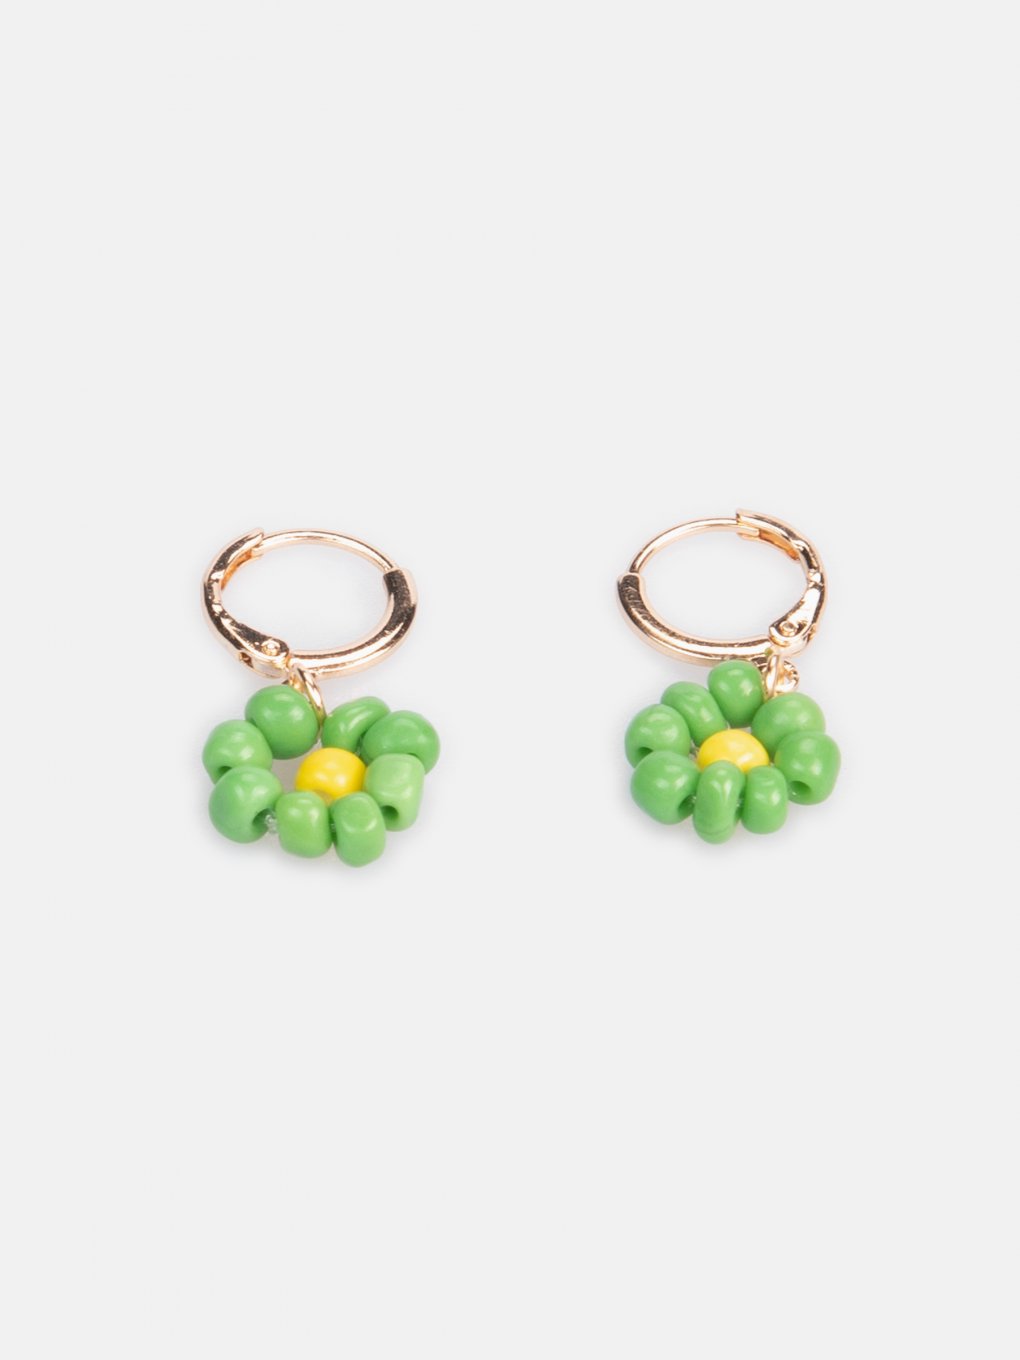 Earrings with flower pendant